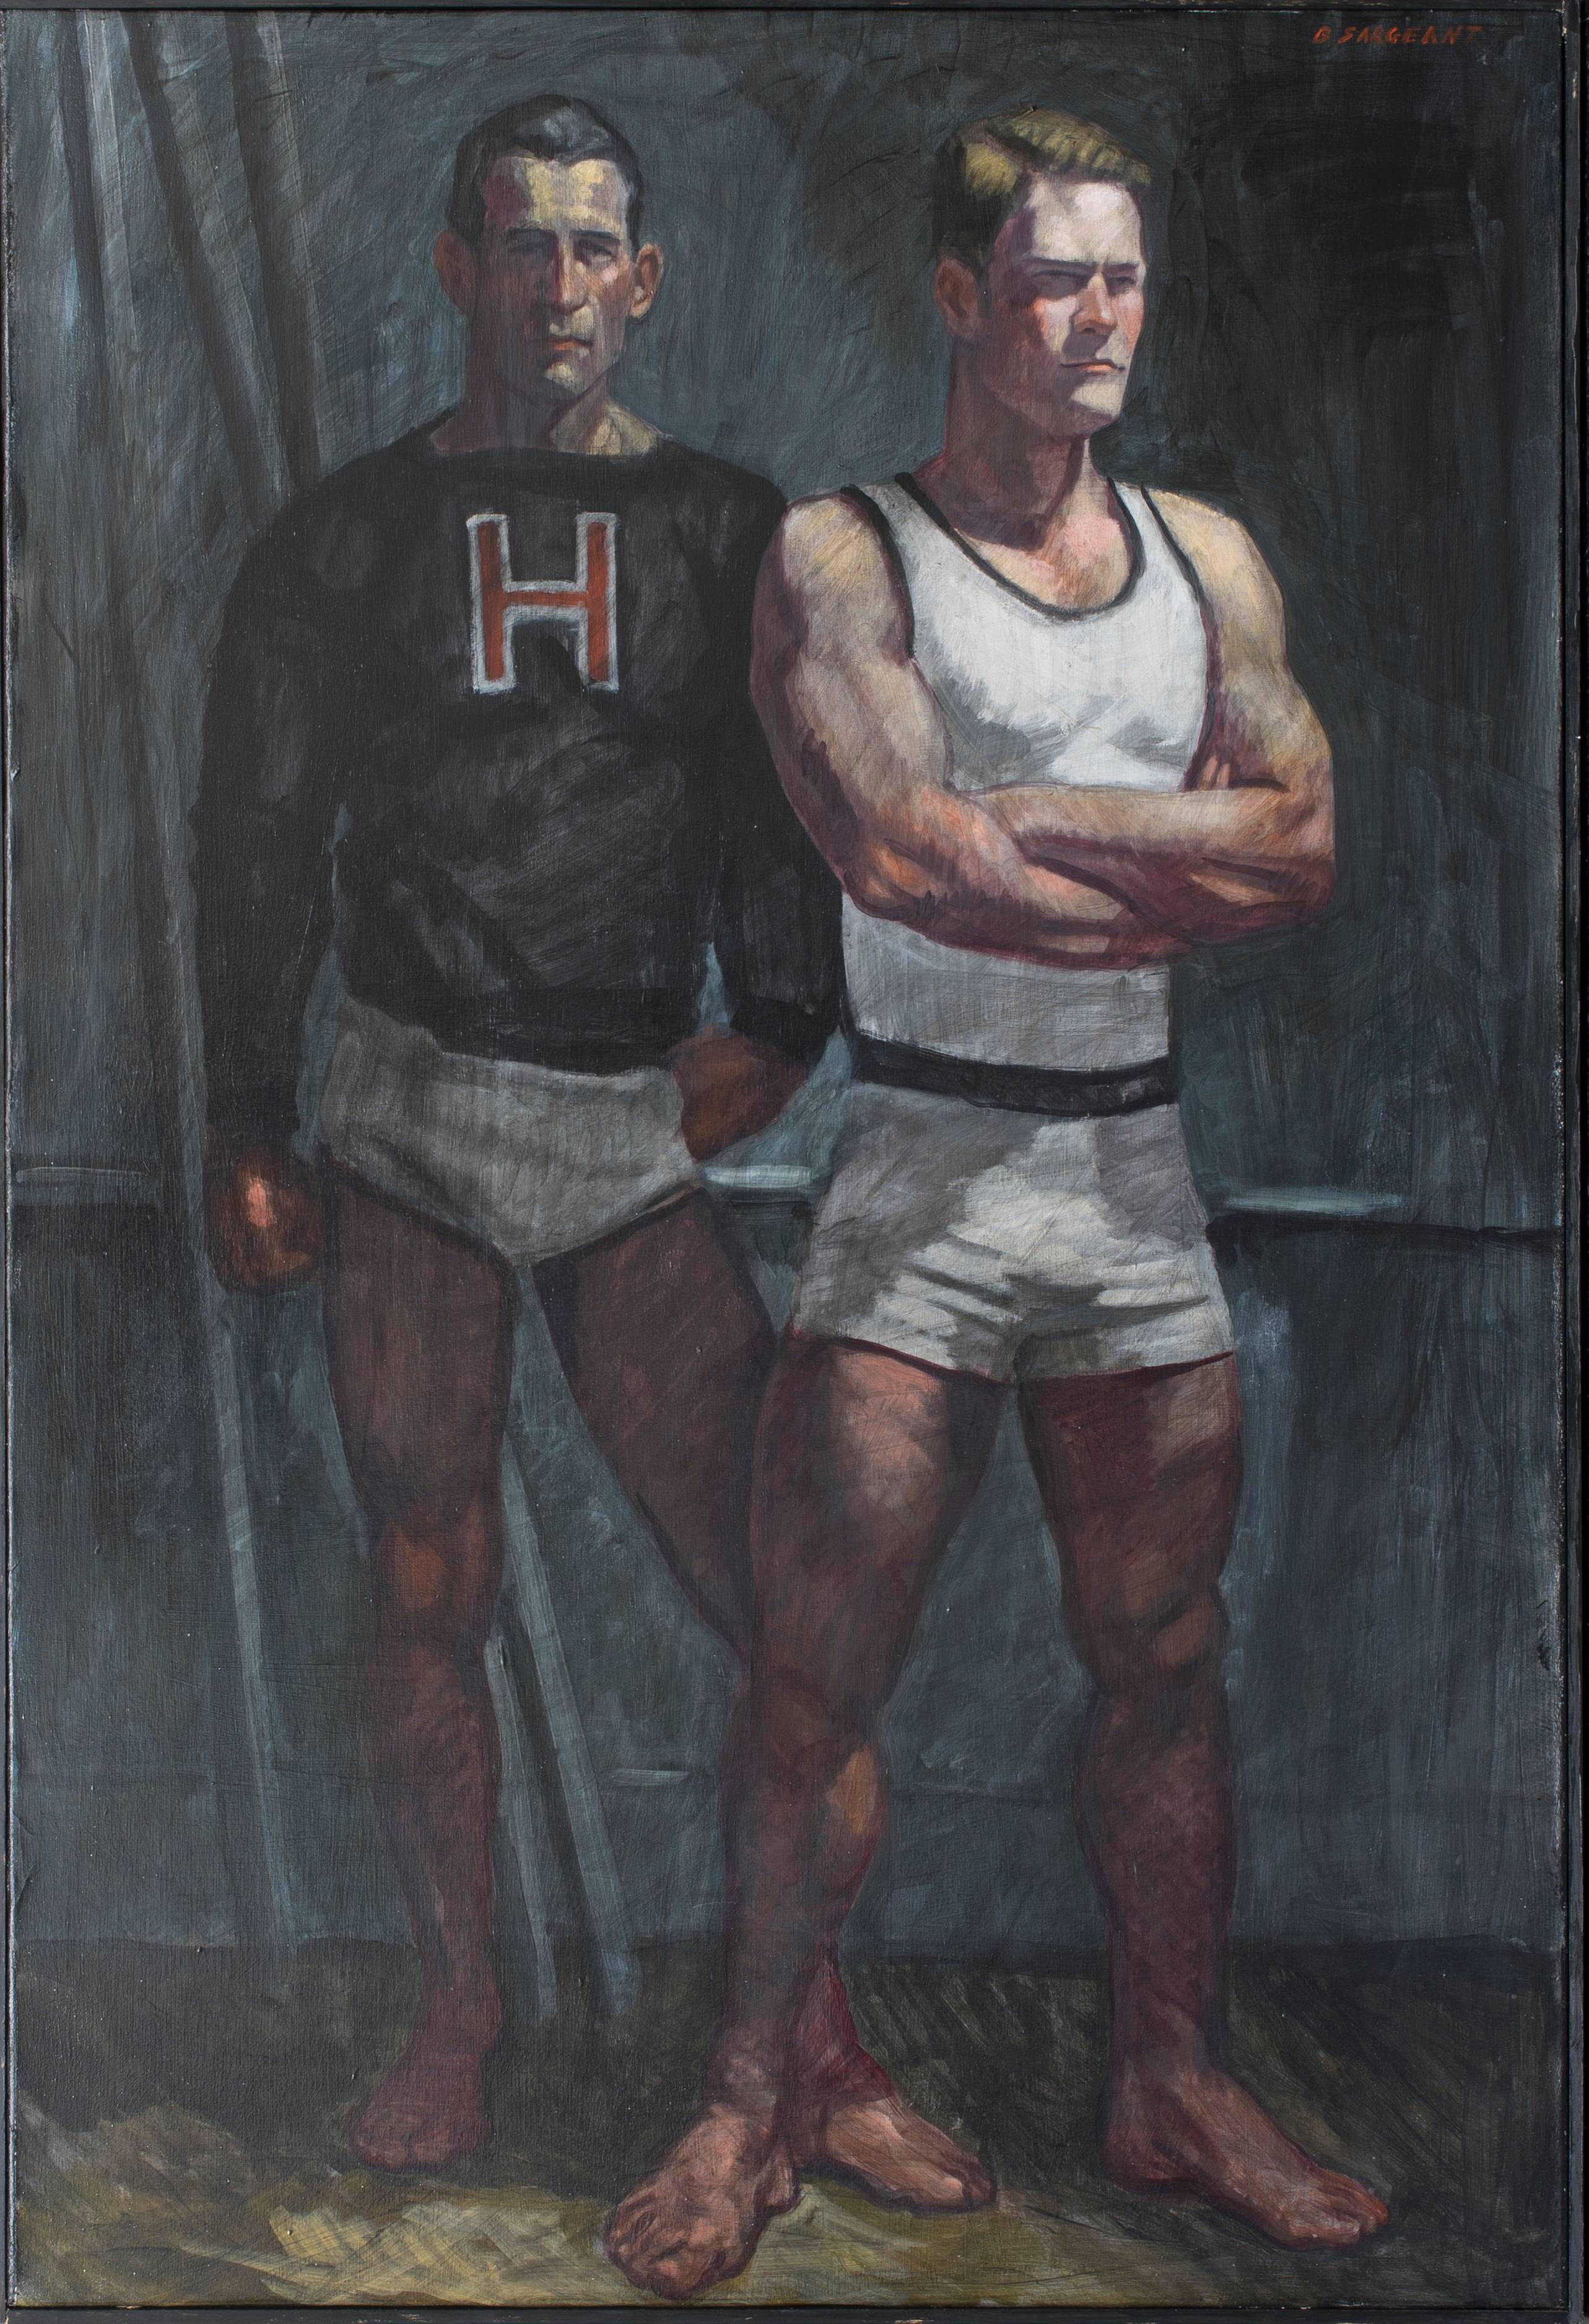 Mark Beard Figurative Painting - Harvard Athletes (Contemporary Oil Portrait of Two Male Athletes)